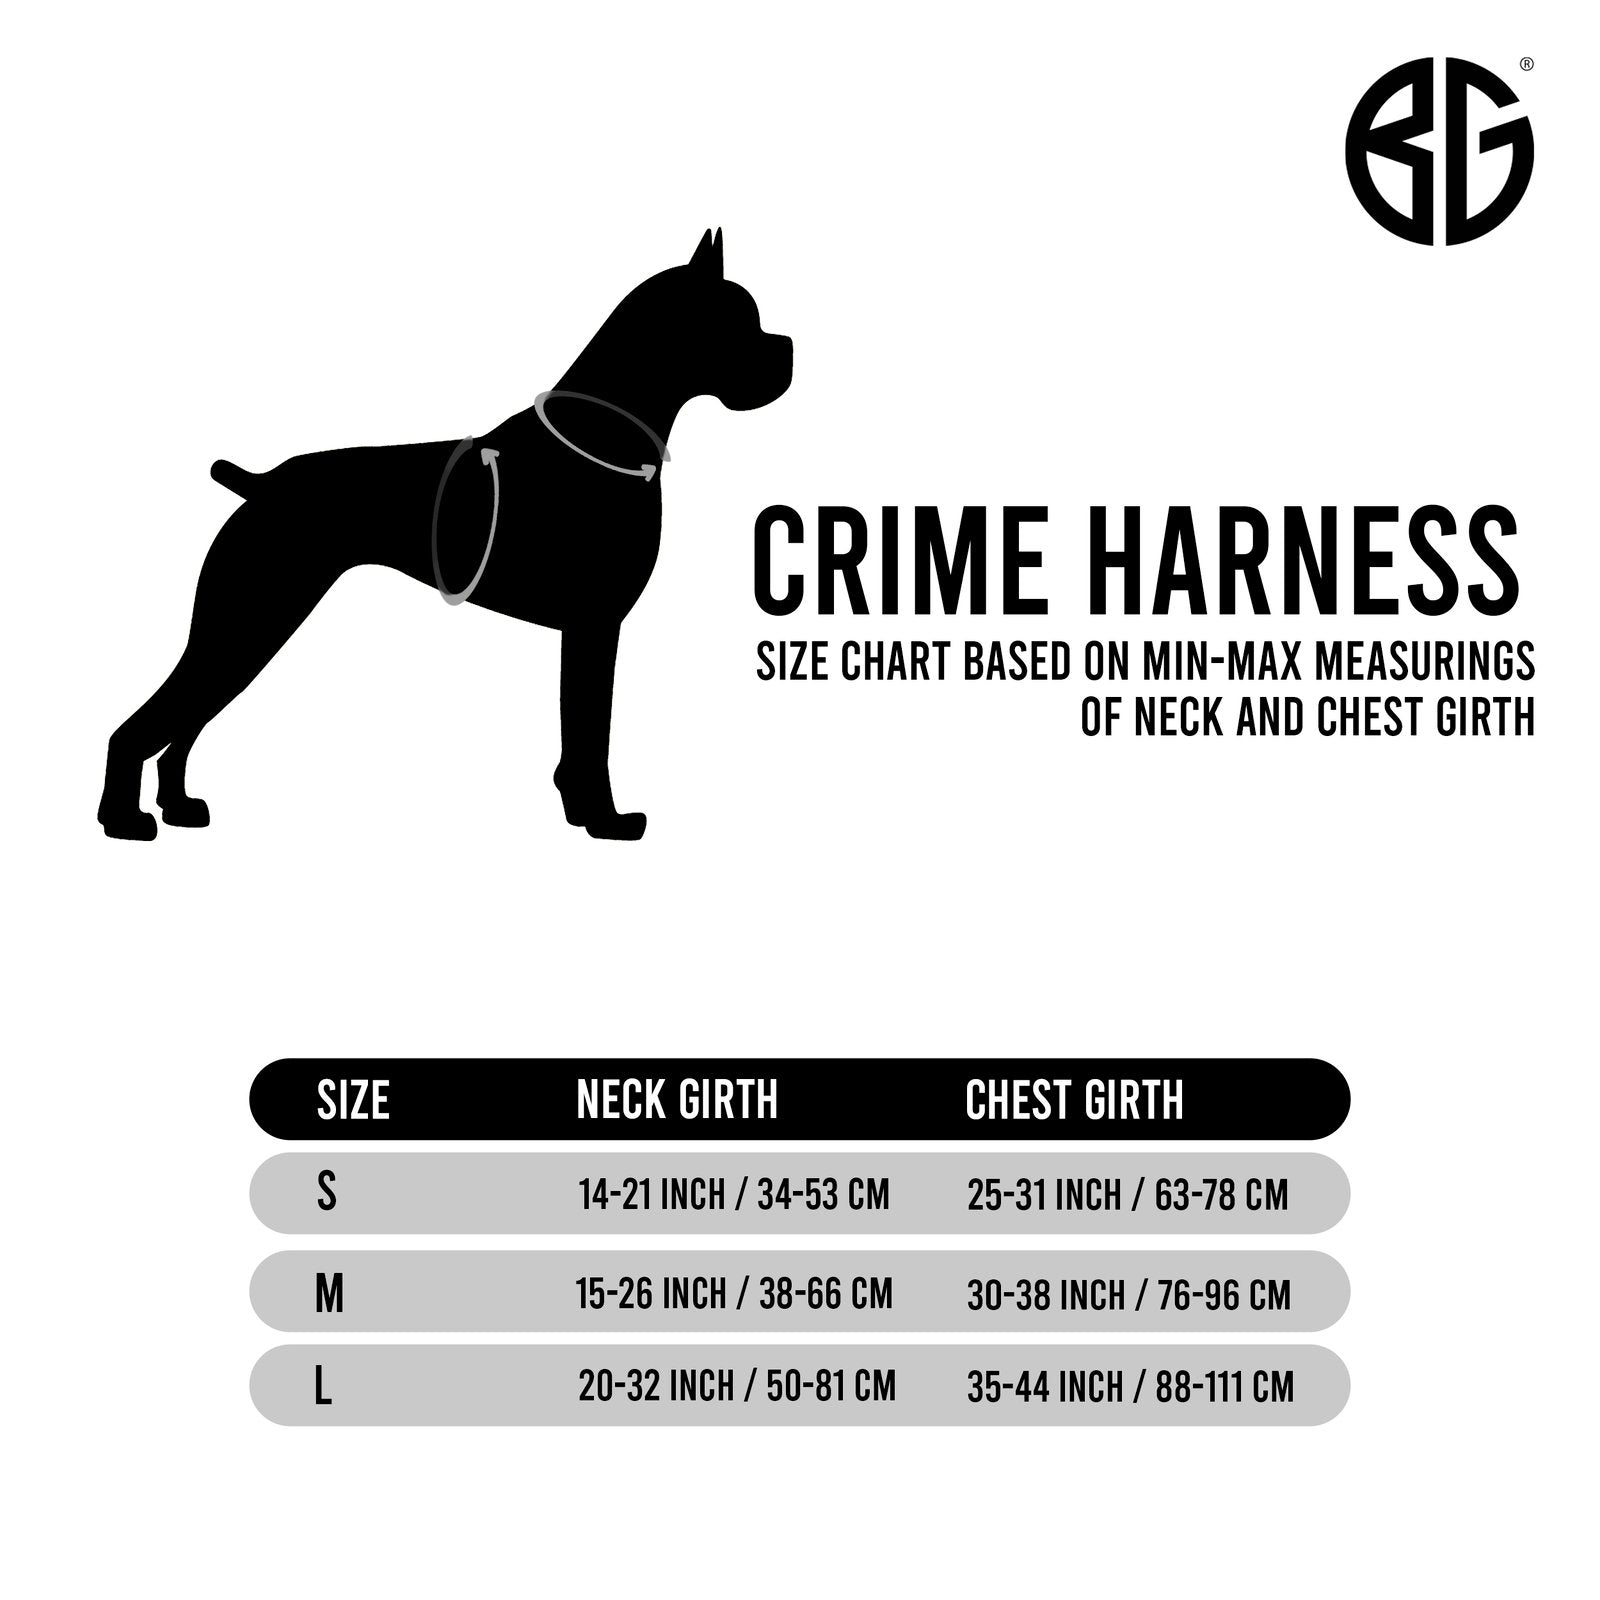 Crime harness